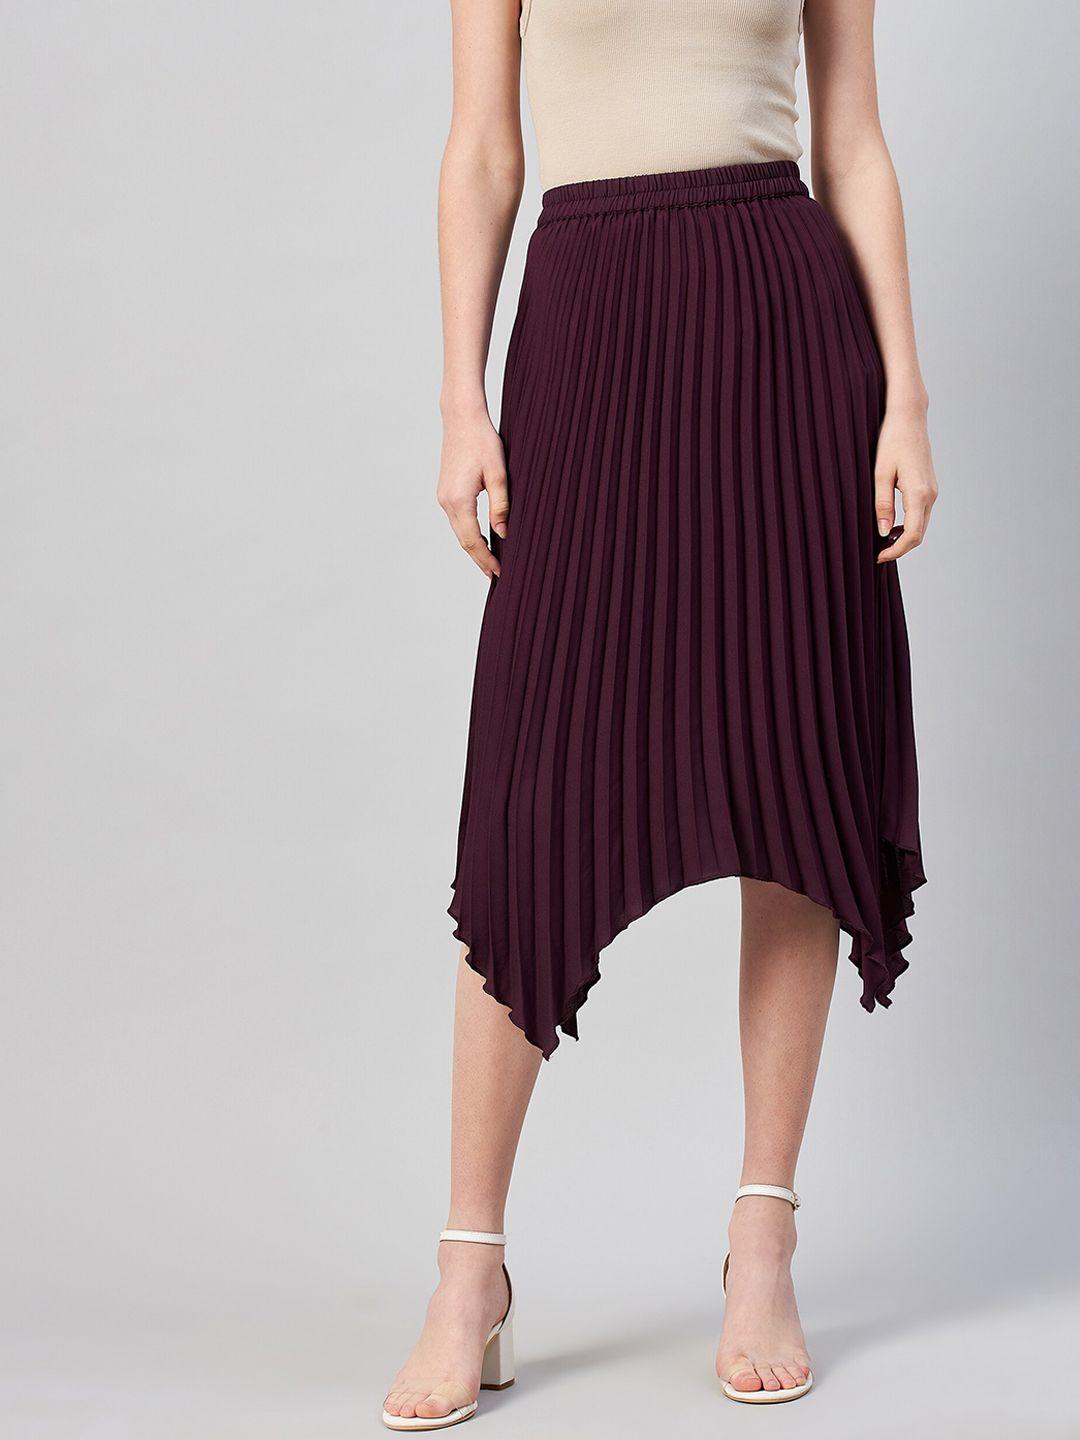 marie claire women burgundy a-line skirt